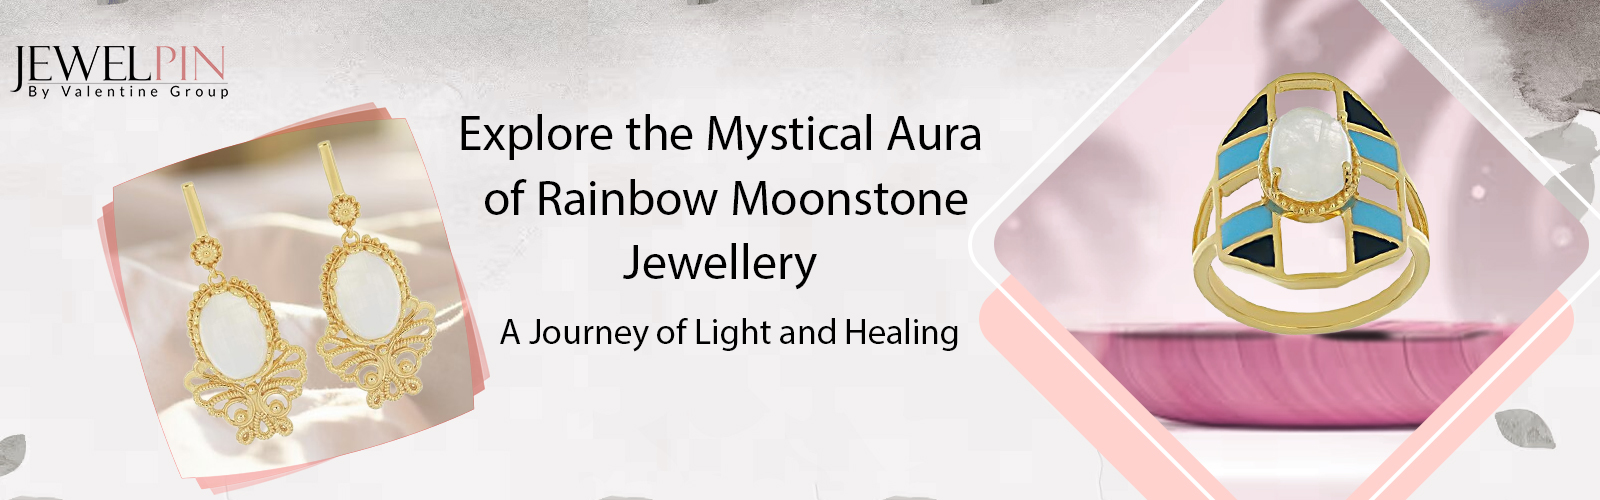 rainbow moonstone jewellery a journey of light and healing